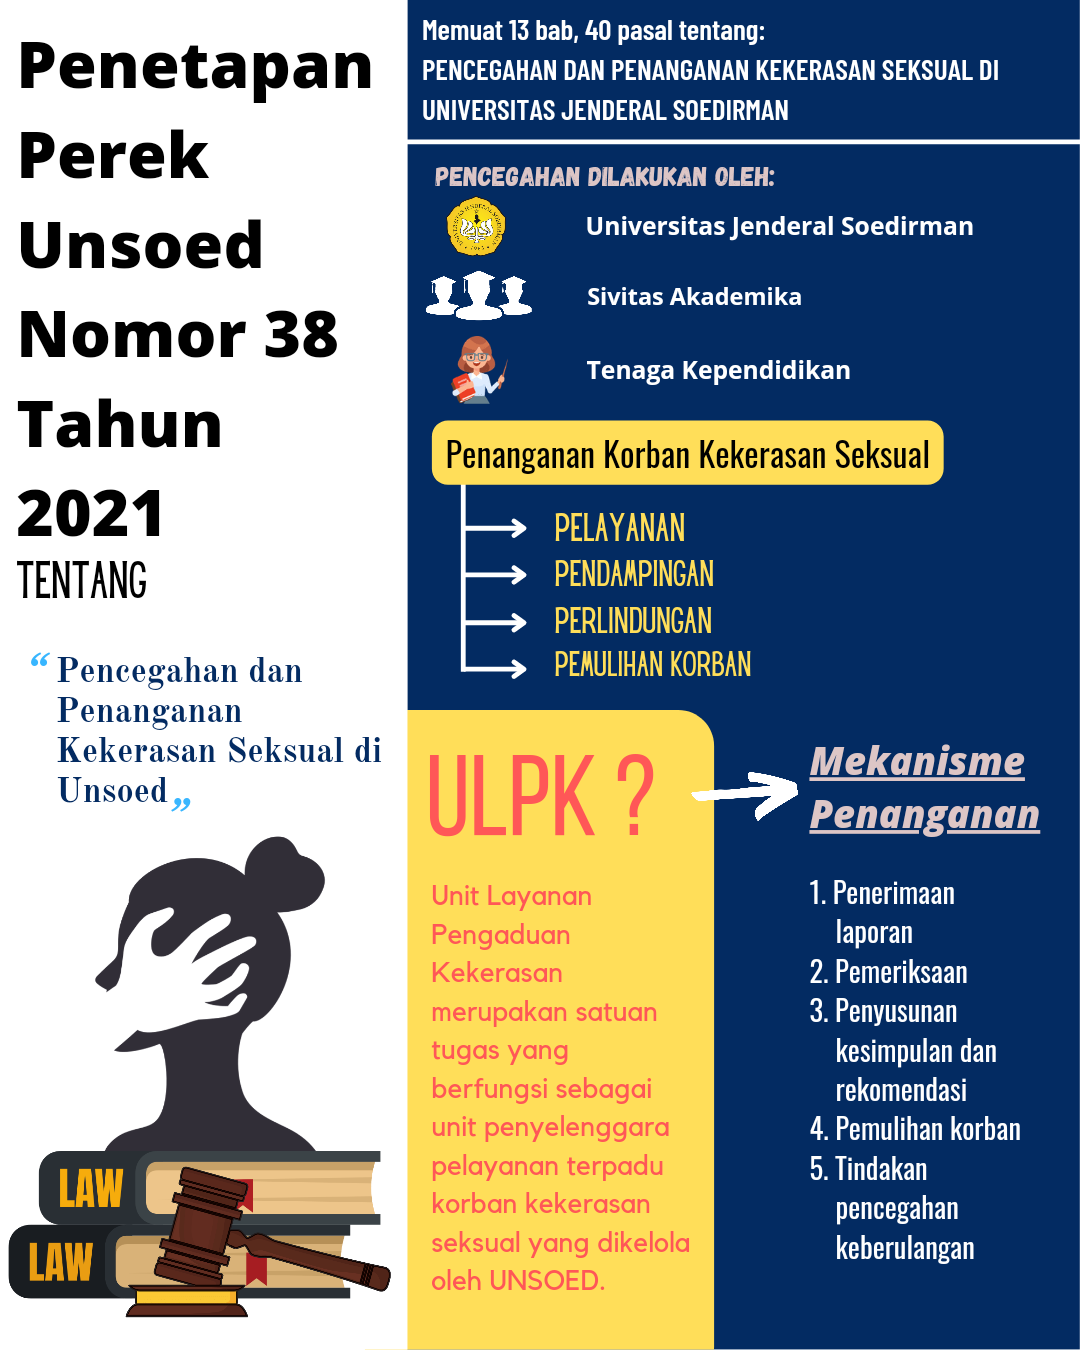 Penetapan Peraturan Rektor Unsoed No. 38 Tahun 2021 Tentang Pencegahan dan Penanganan Kekerasan Seksual di Unsoed